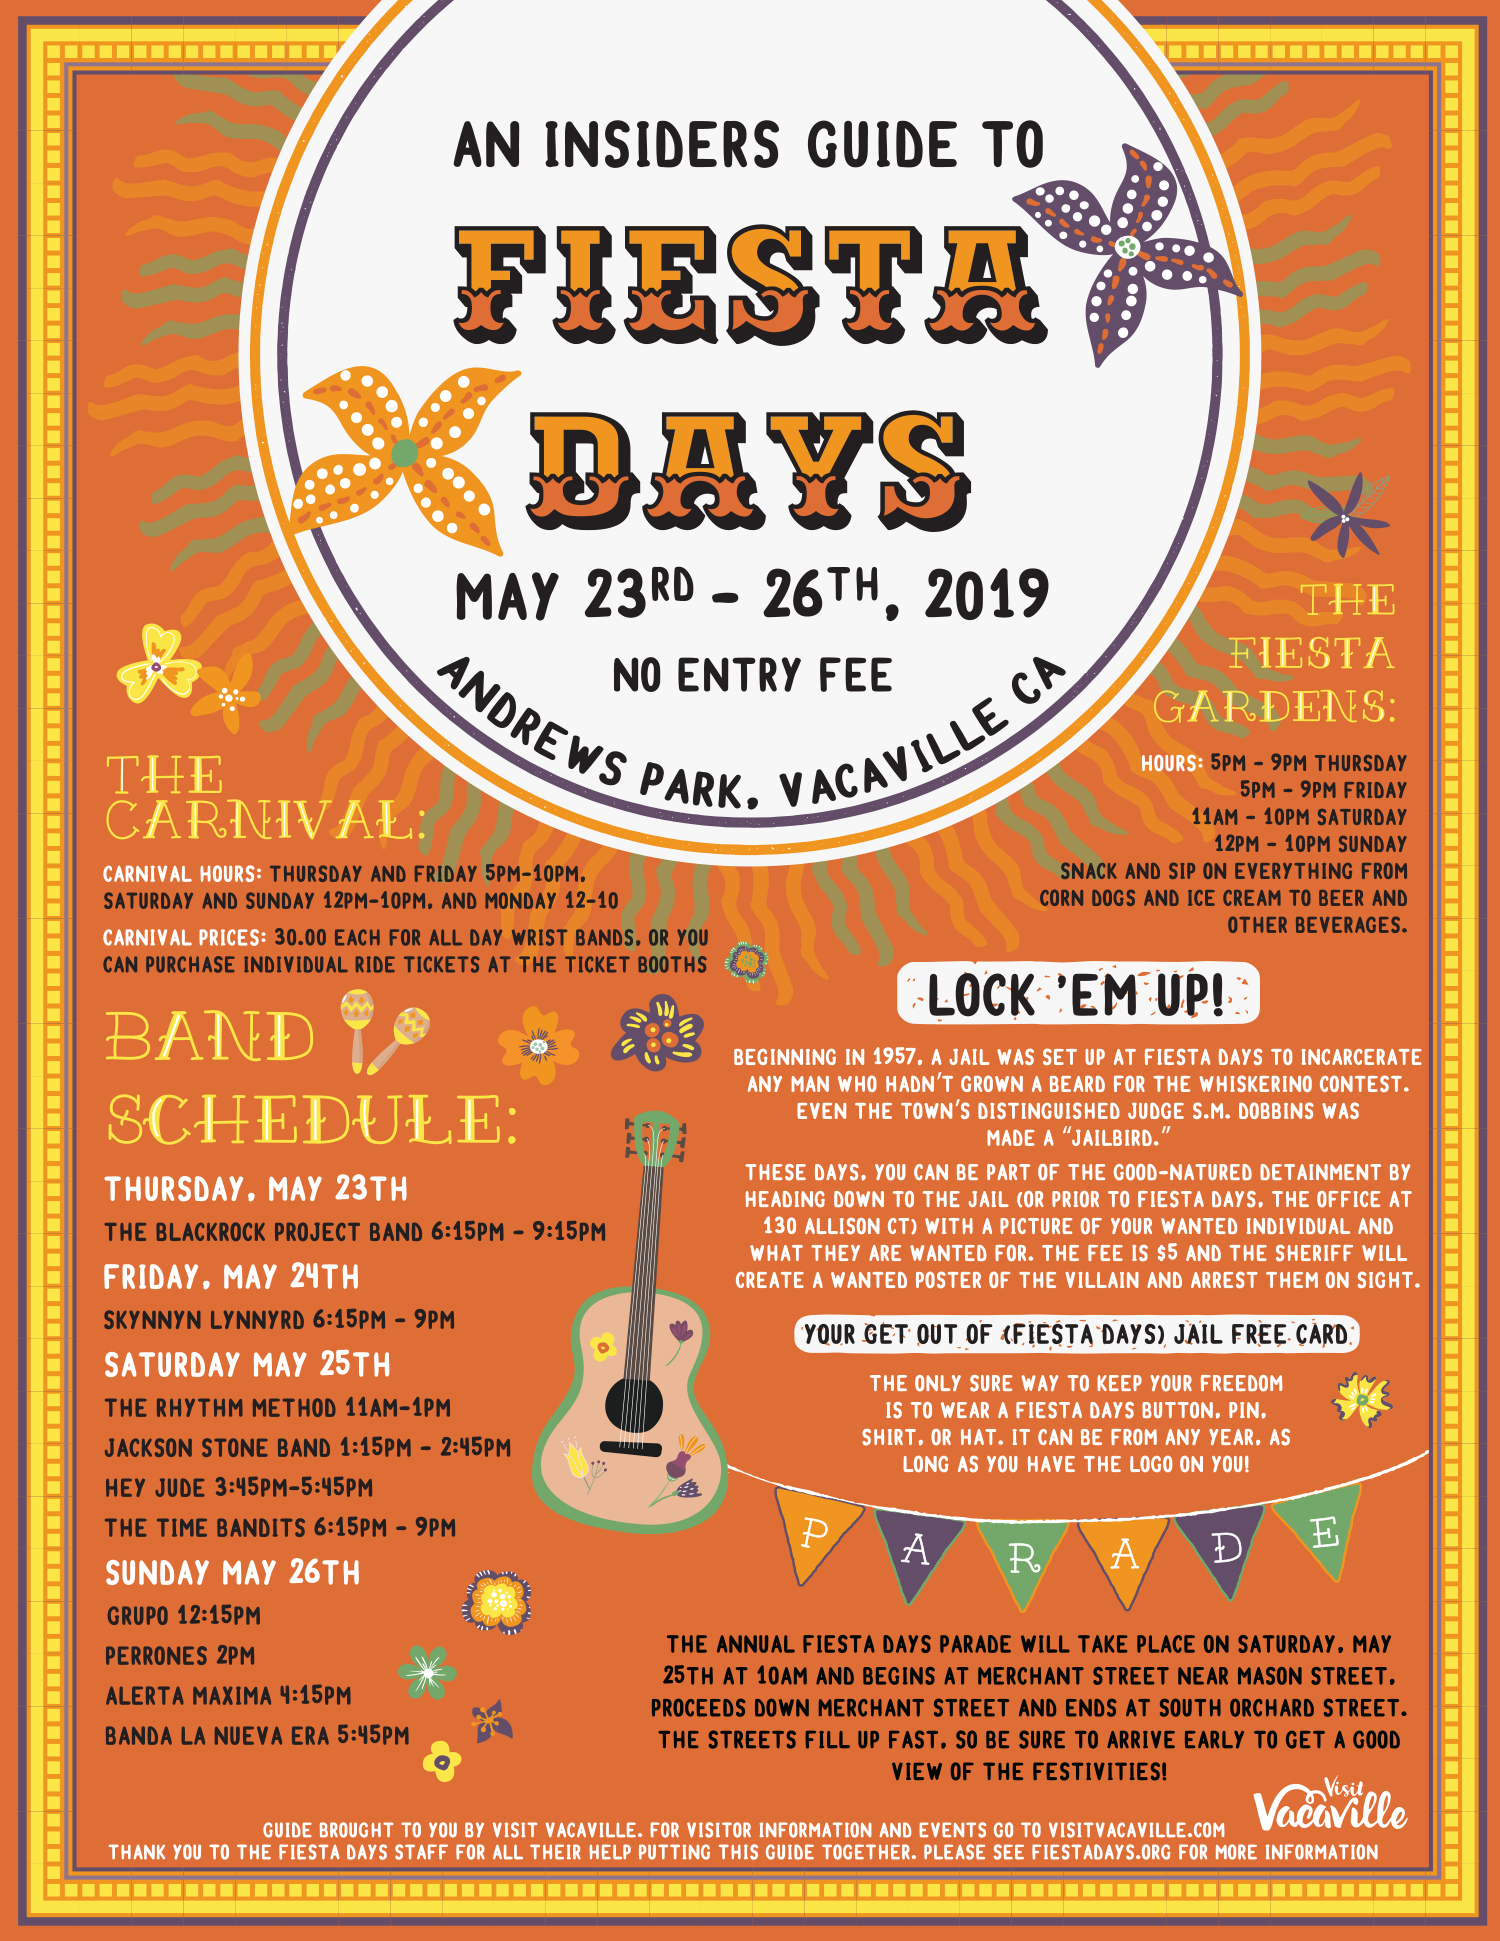 Vacaville Fiesta Days - Visit Vacaville